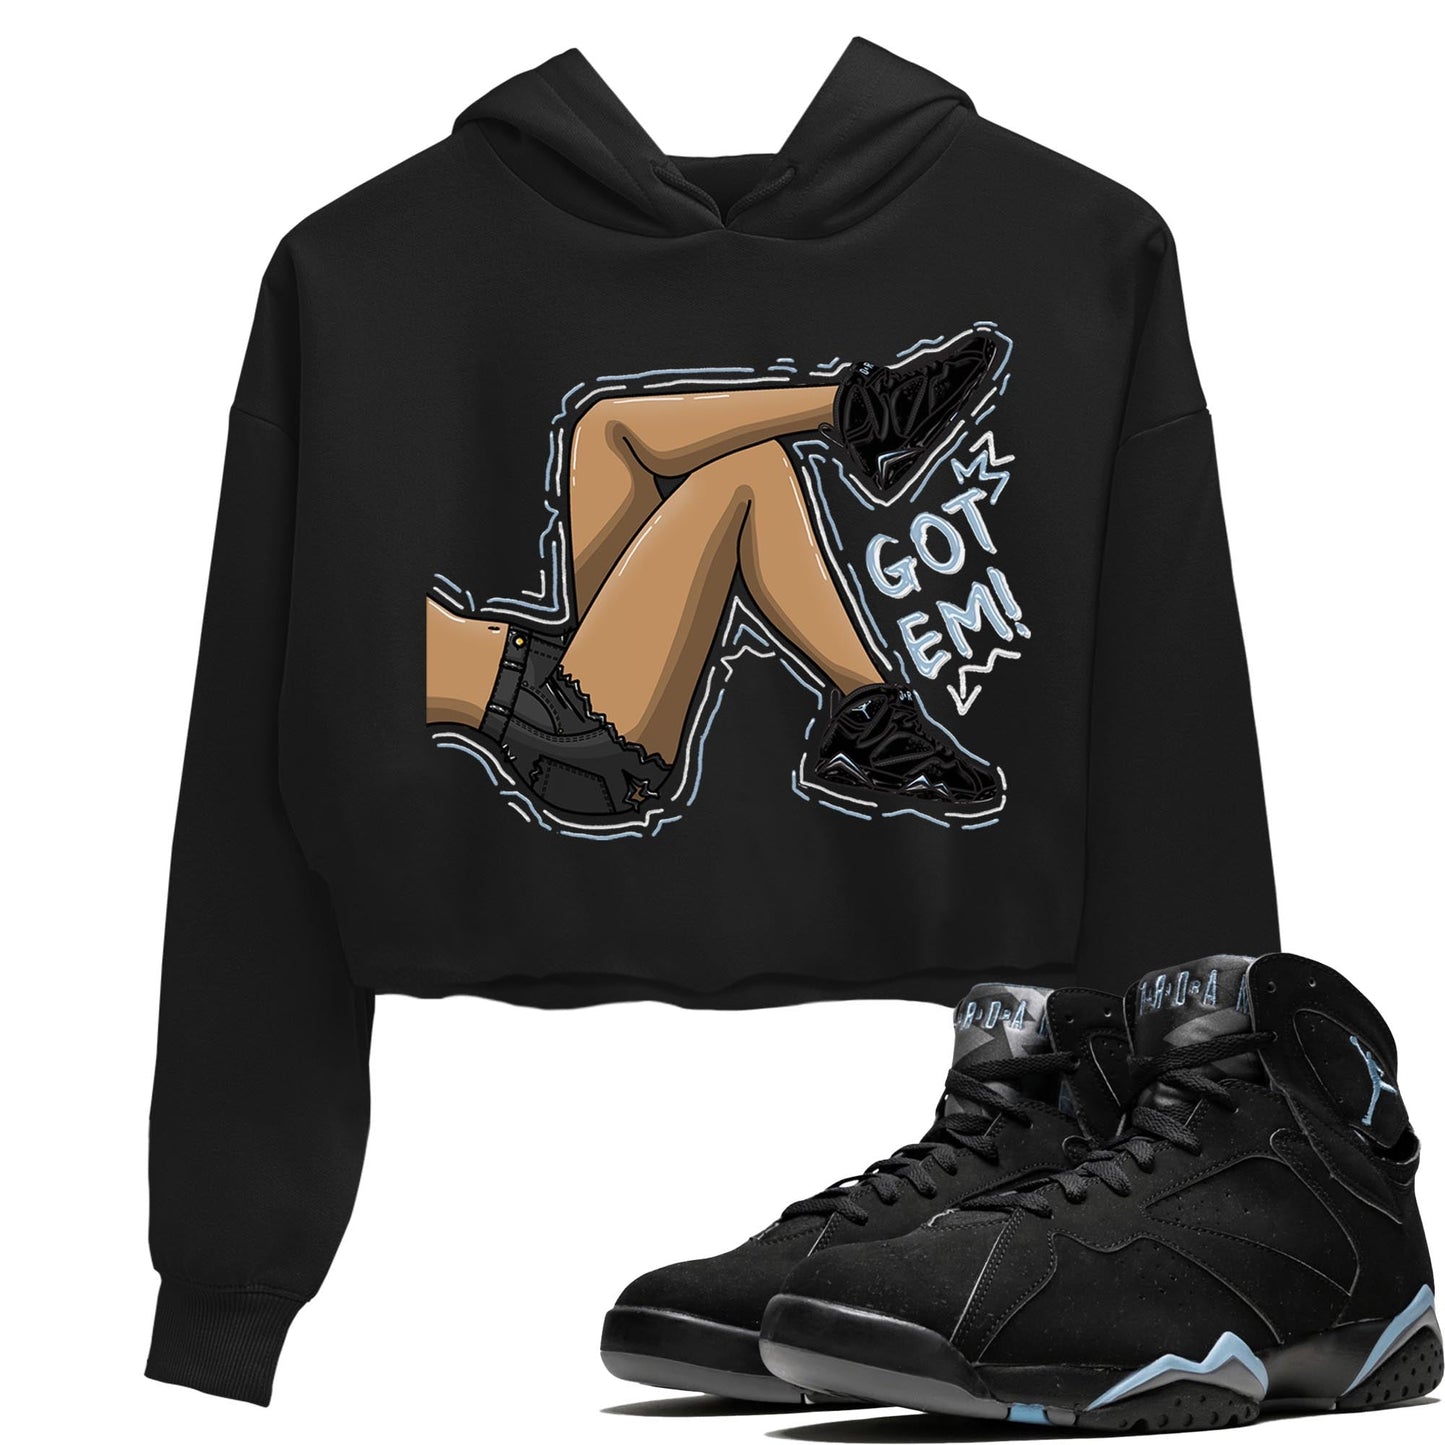 Air Jordan 7 Chambray shirt to match jordans Got Em Legs Streetwear Sneaker Shirt AJ7 Chambray Drip Gear Zone Sneaker Matching Clothing Black 1 Crop T-Shirt